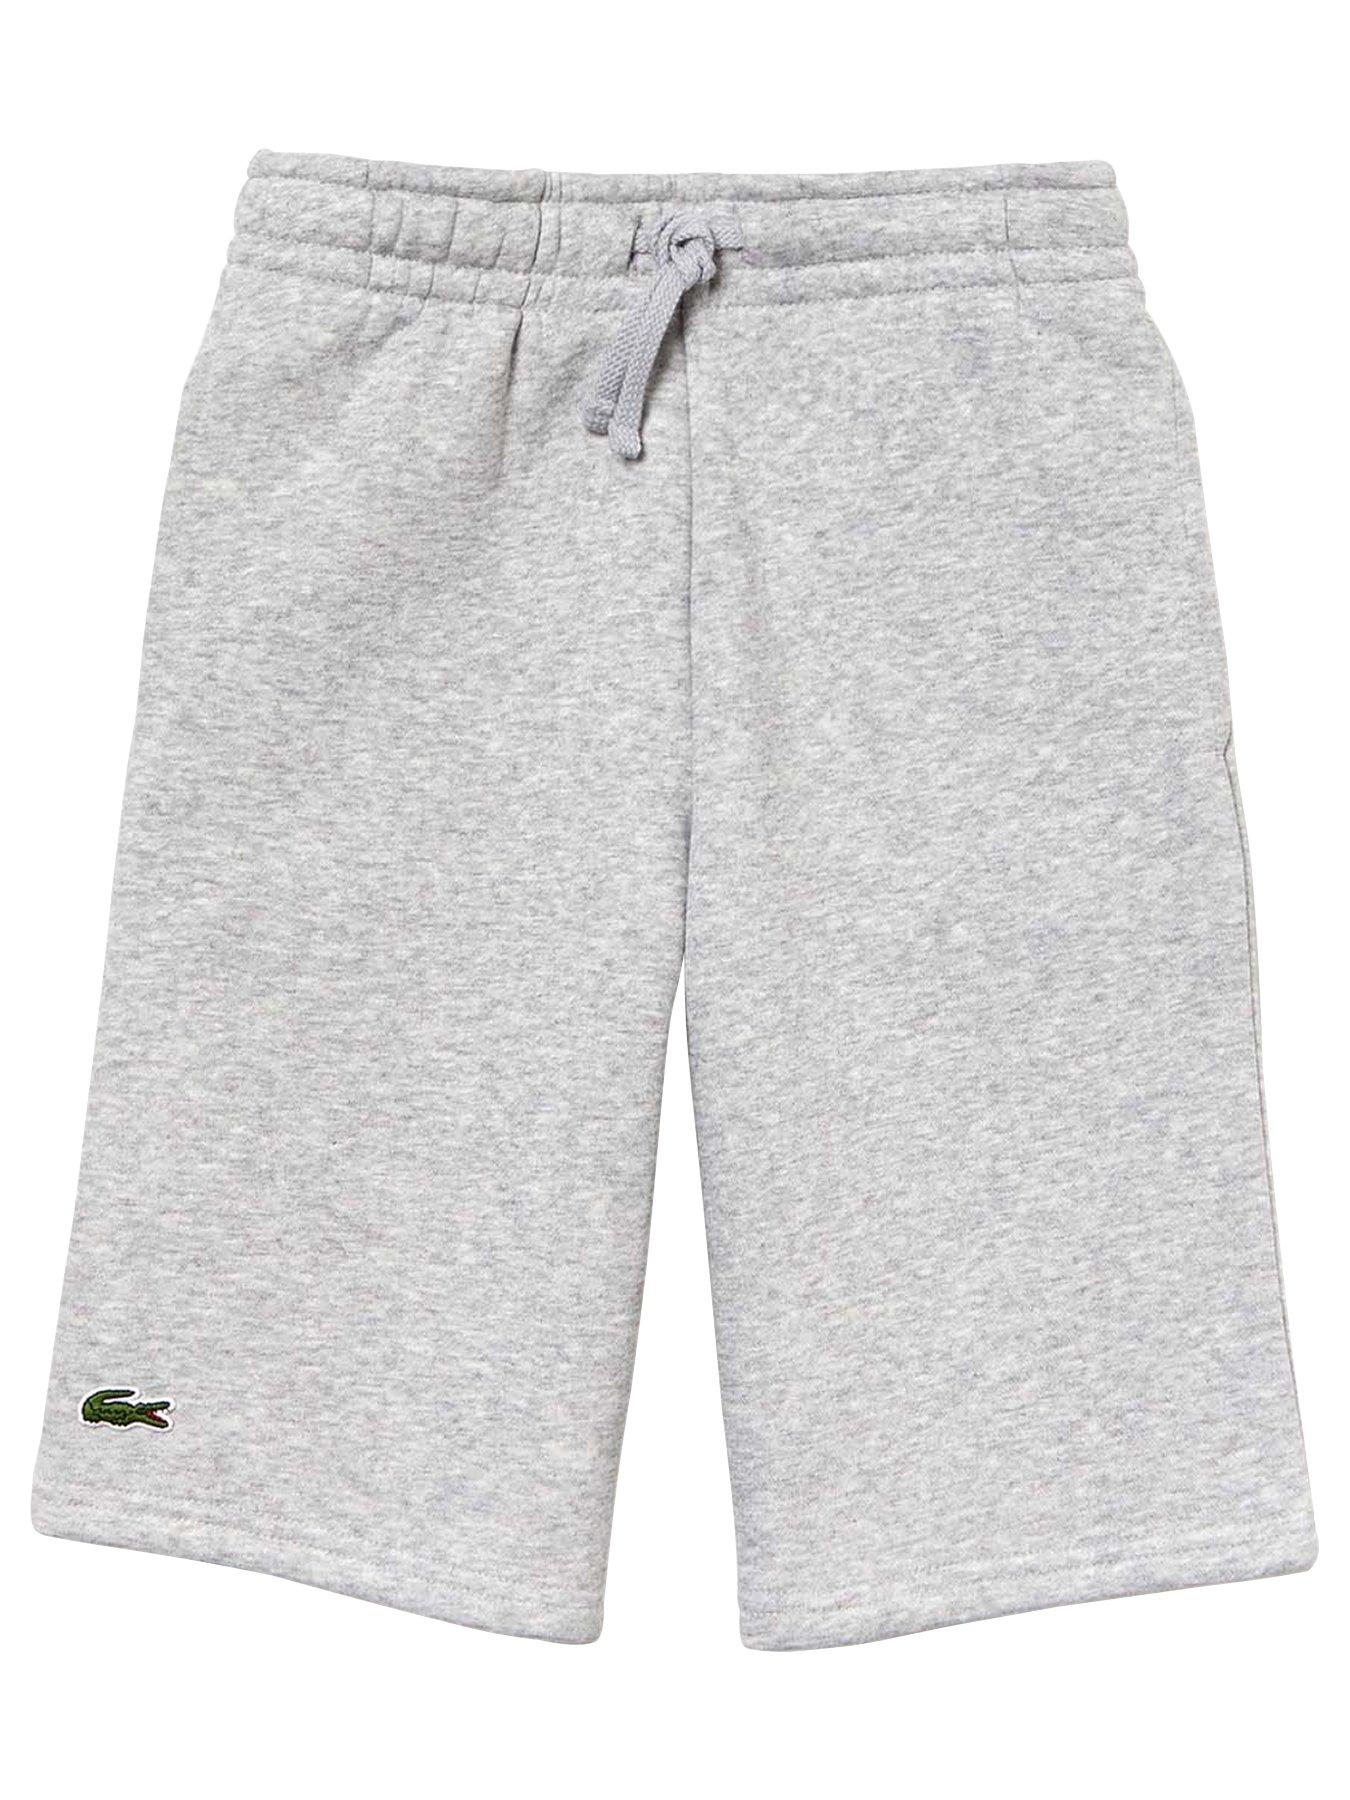 Kids Boys Classic Jersey Shorts - Grey Marl